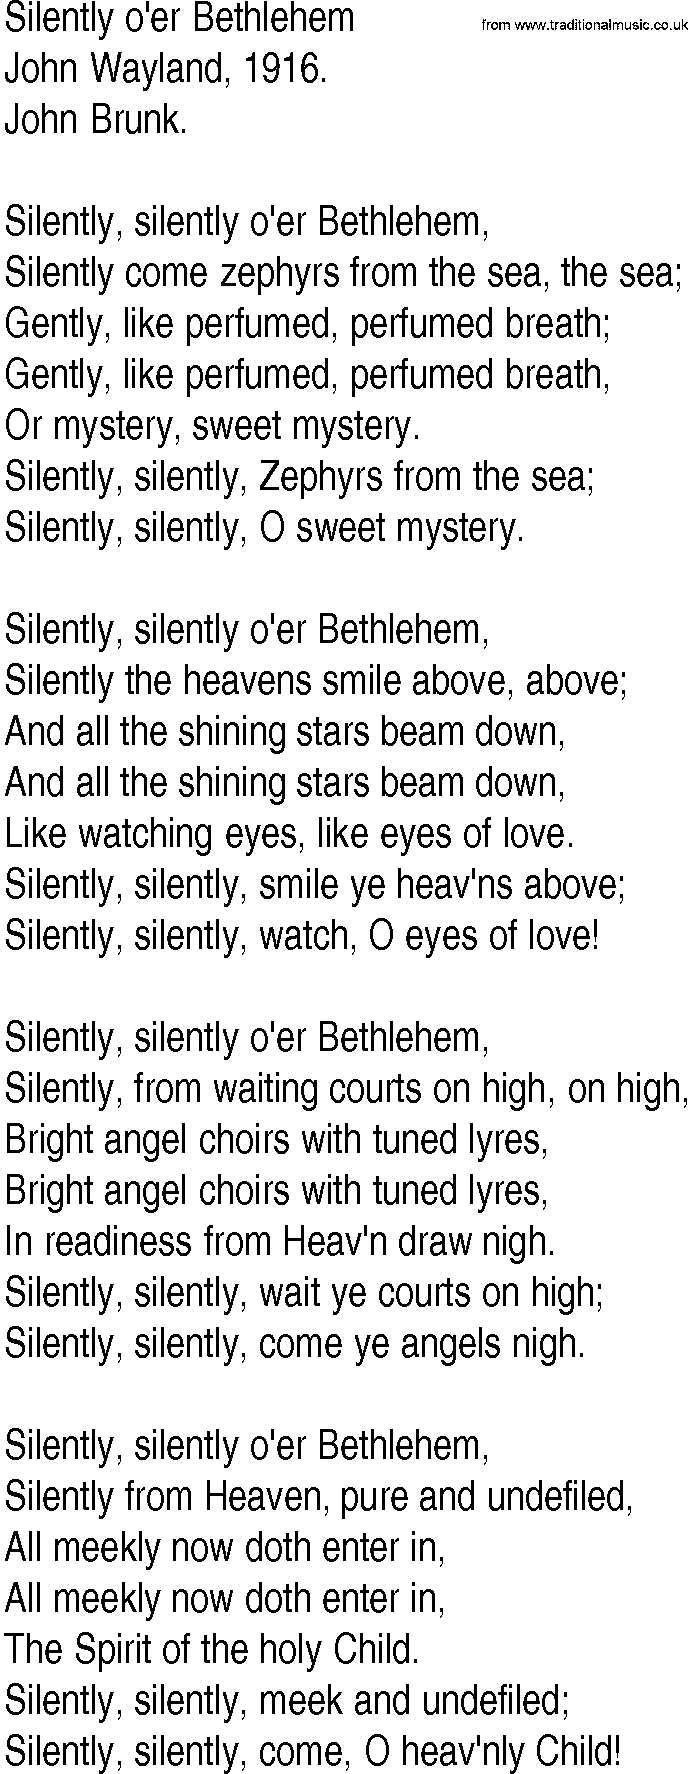 Hymn and Gospel Song: Silently o'er Bethlehem by John Wayland lyrics